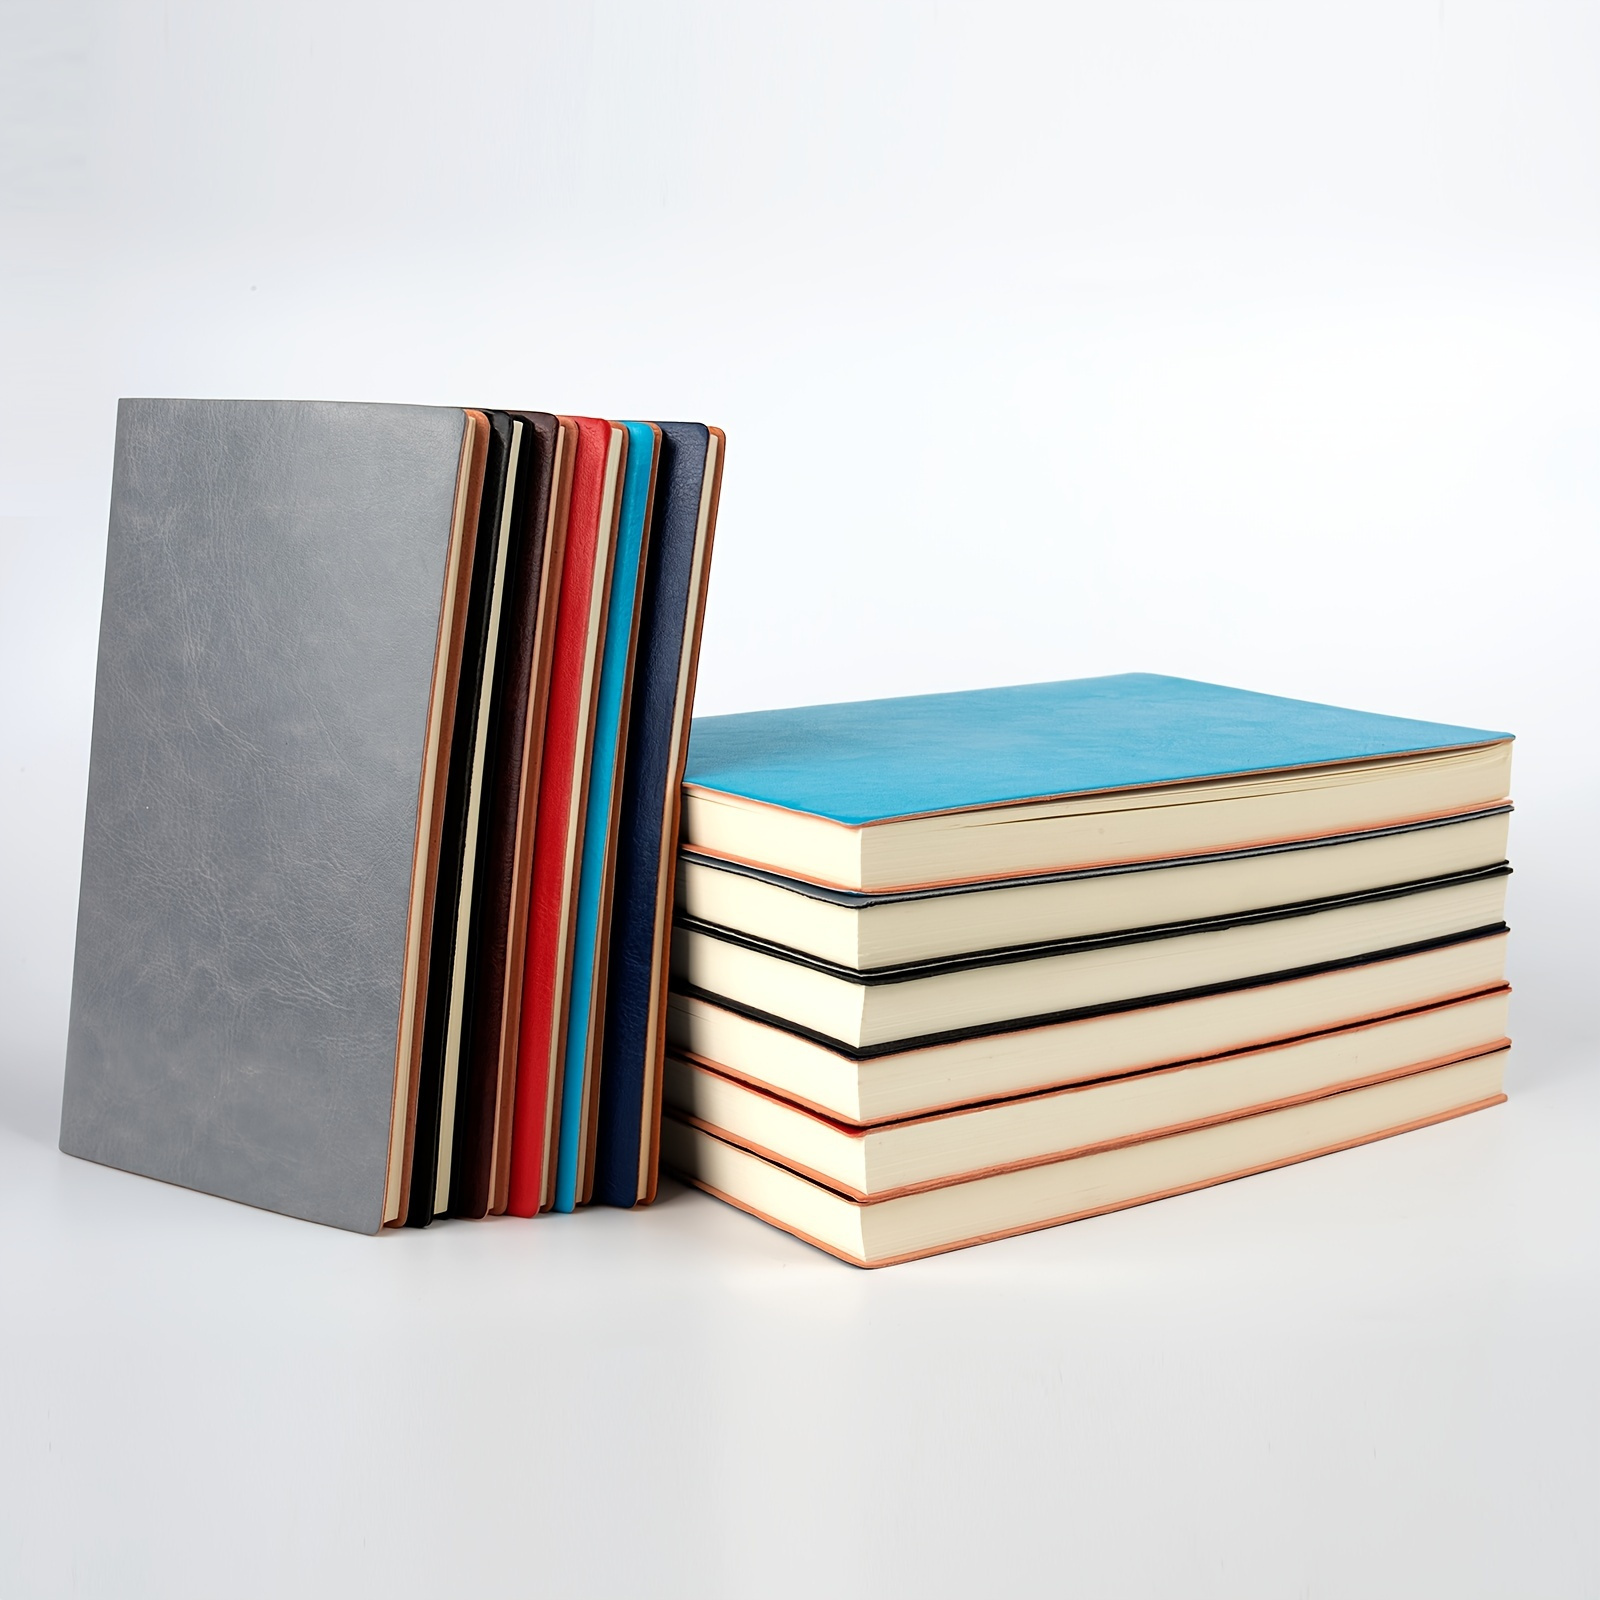 Black Card Notebooks Journals In Bulk Blank Paper - Temu